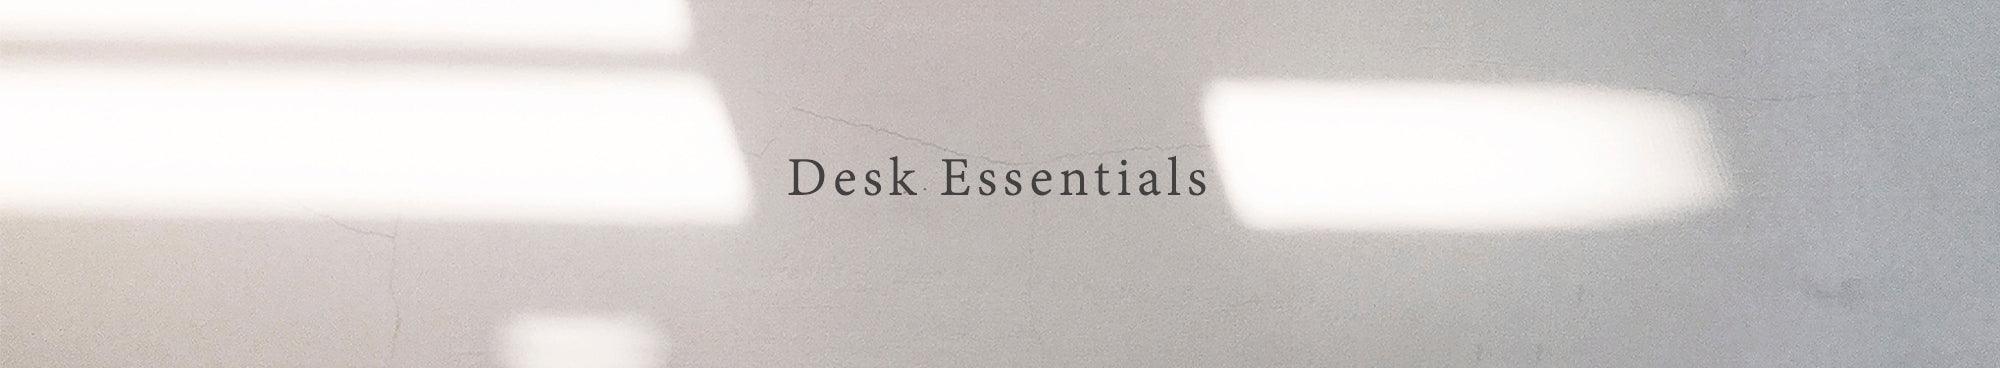 Desk Essentials - Rikumo